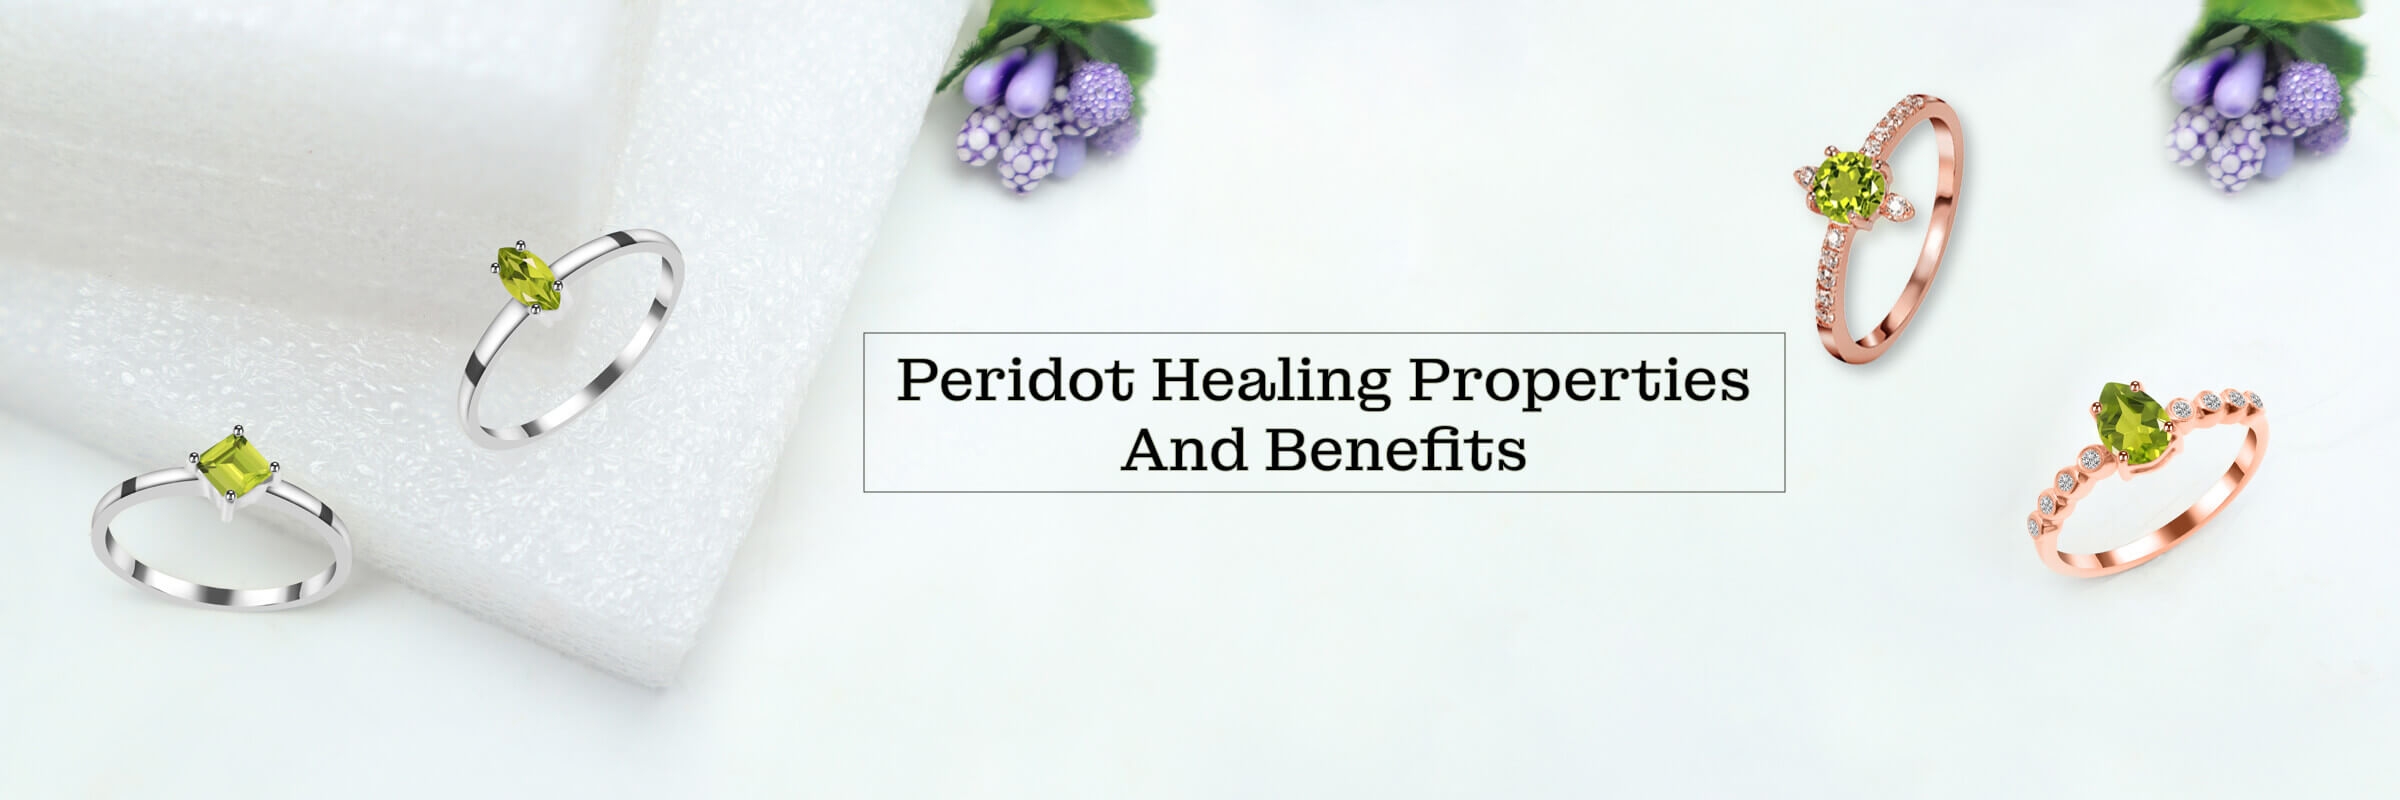 Peridot Healing Properties And Benefits